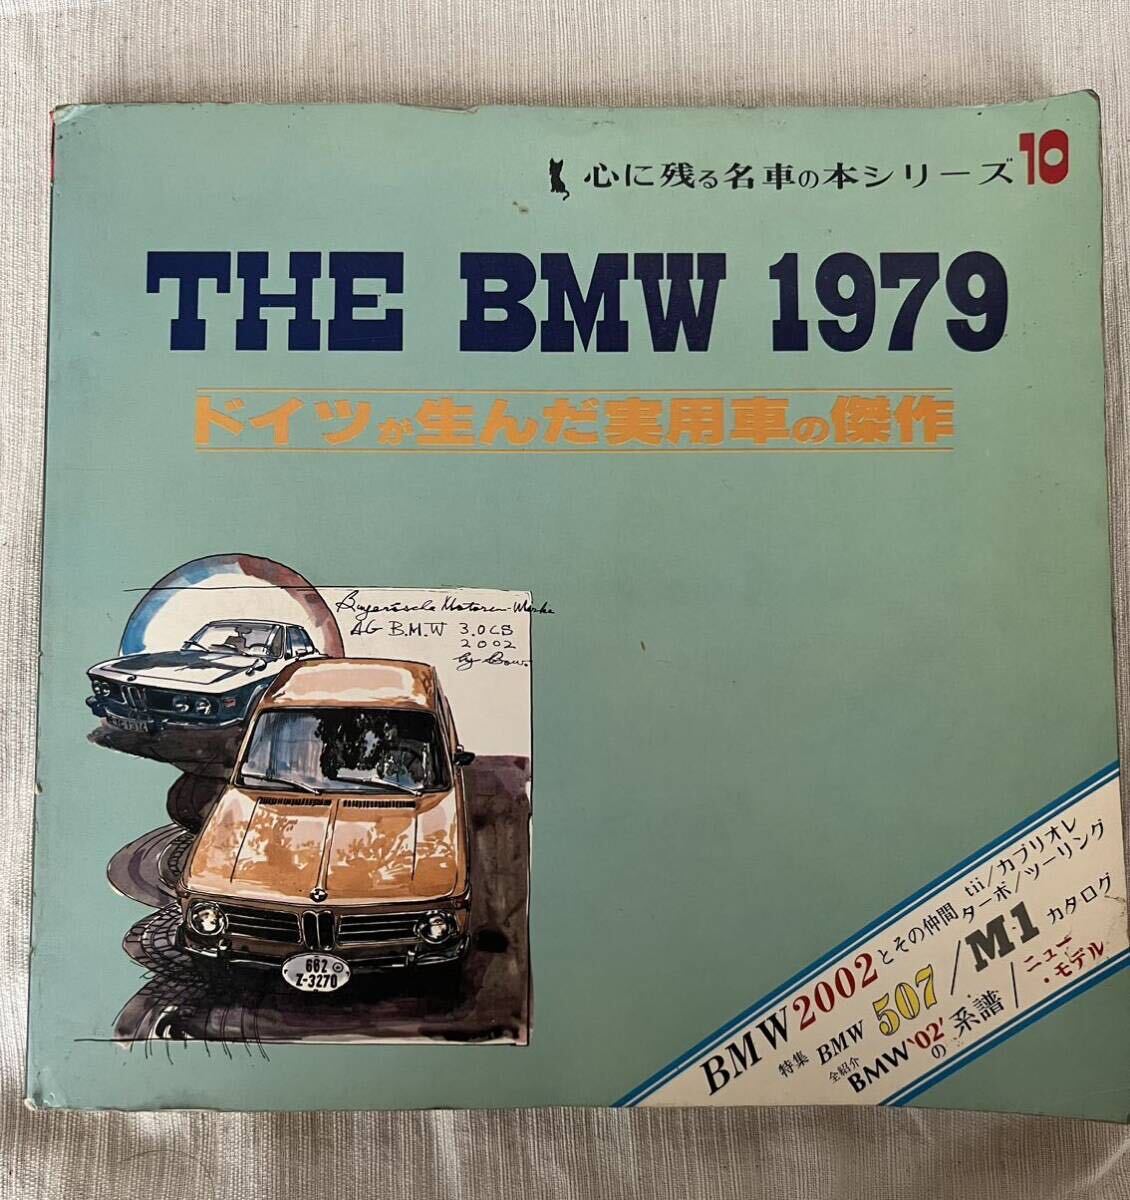  каталог Volkswagen VW FLAT4 сердце . осталось . известная машина. книга@ серии BMW 1979 10 Mini 1980 16 NEKO старый машина машина Showa 